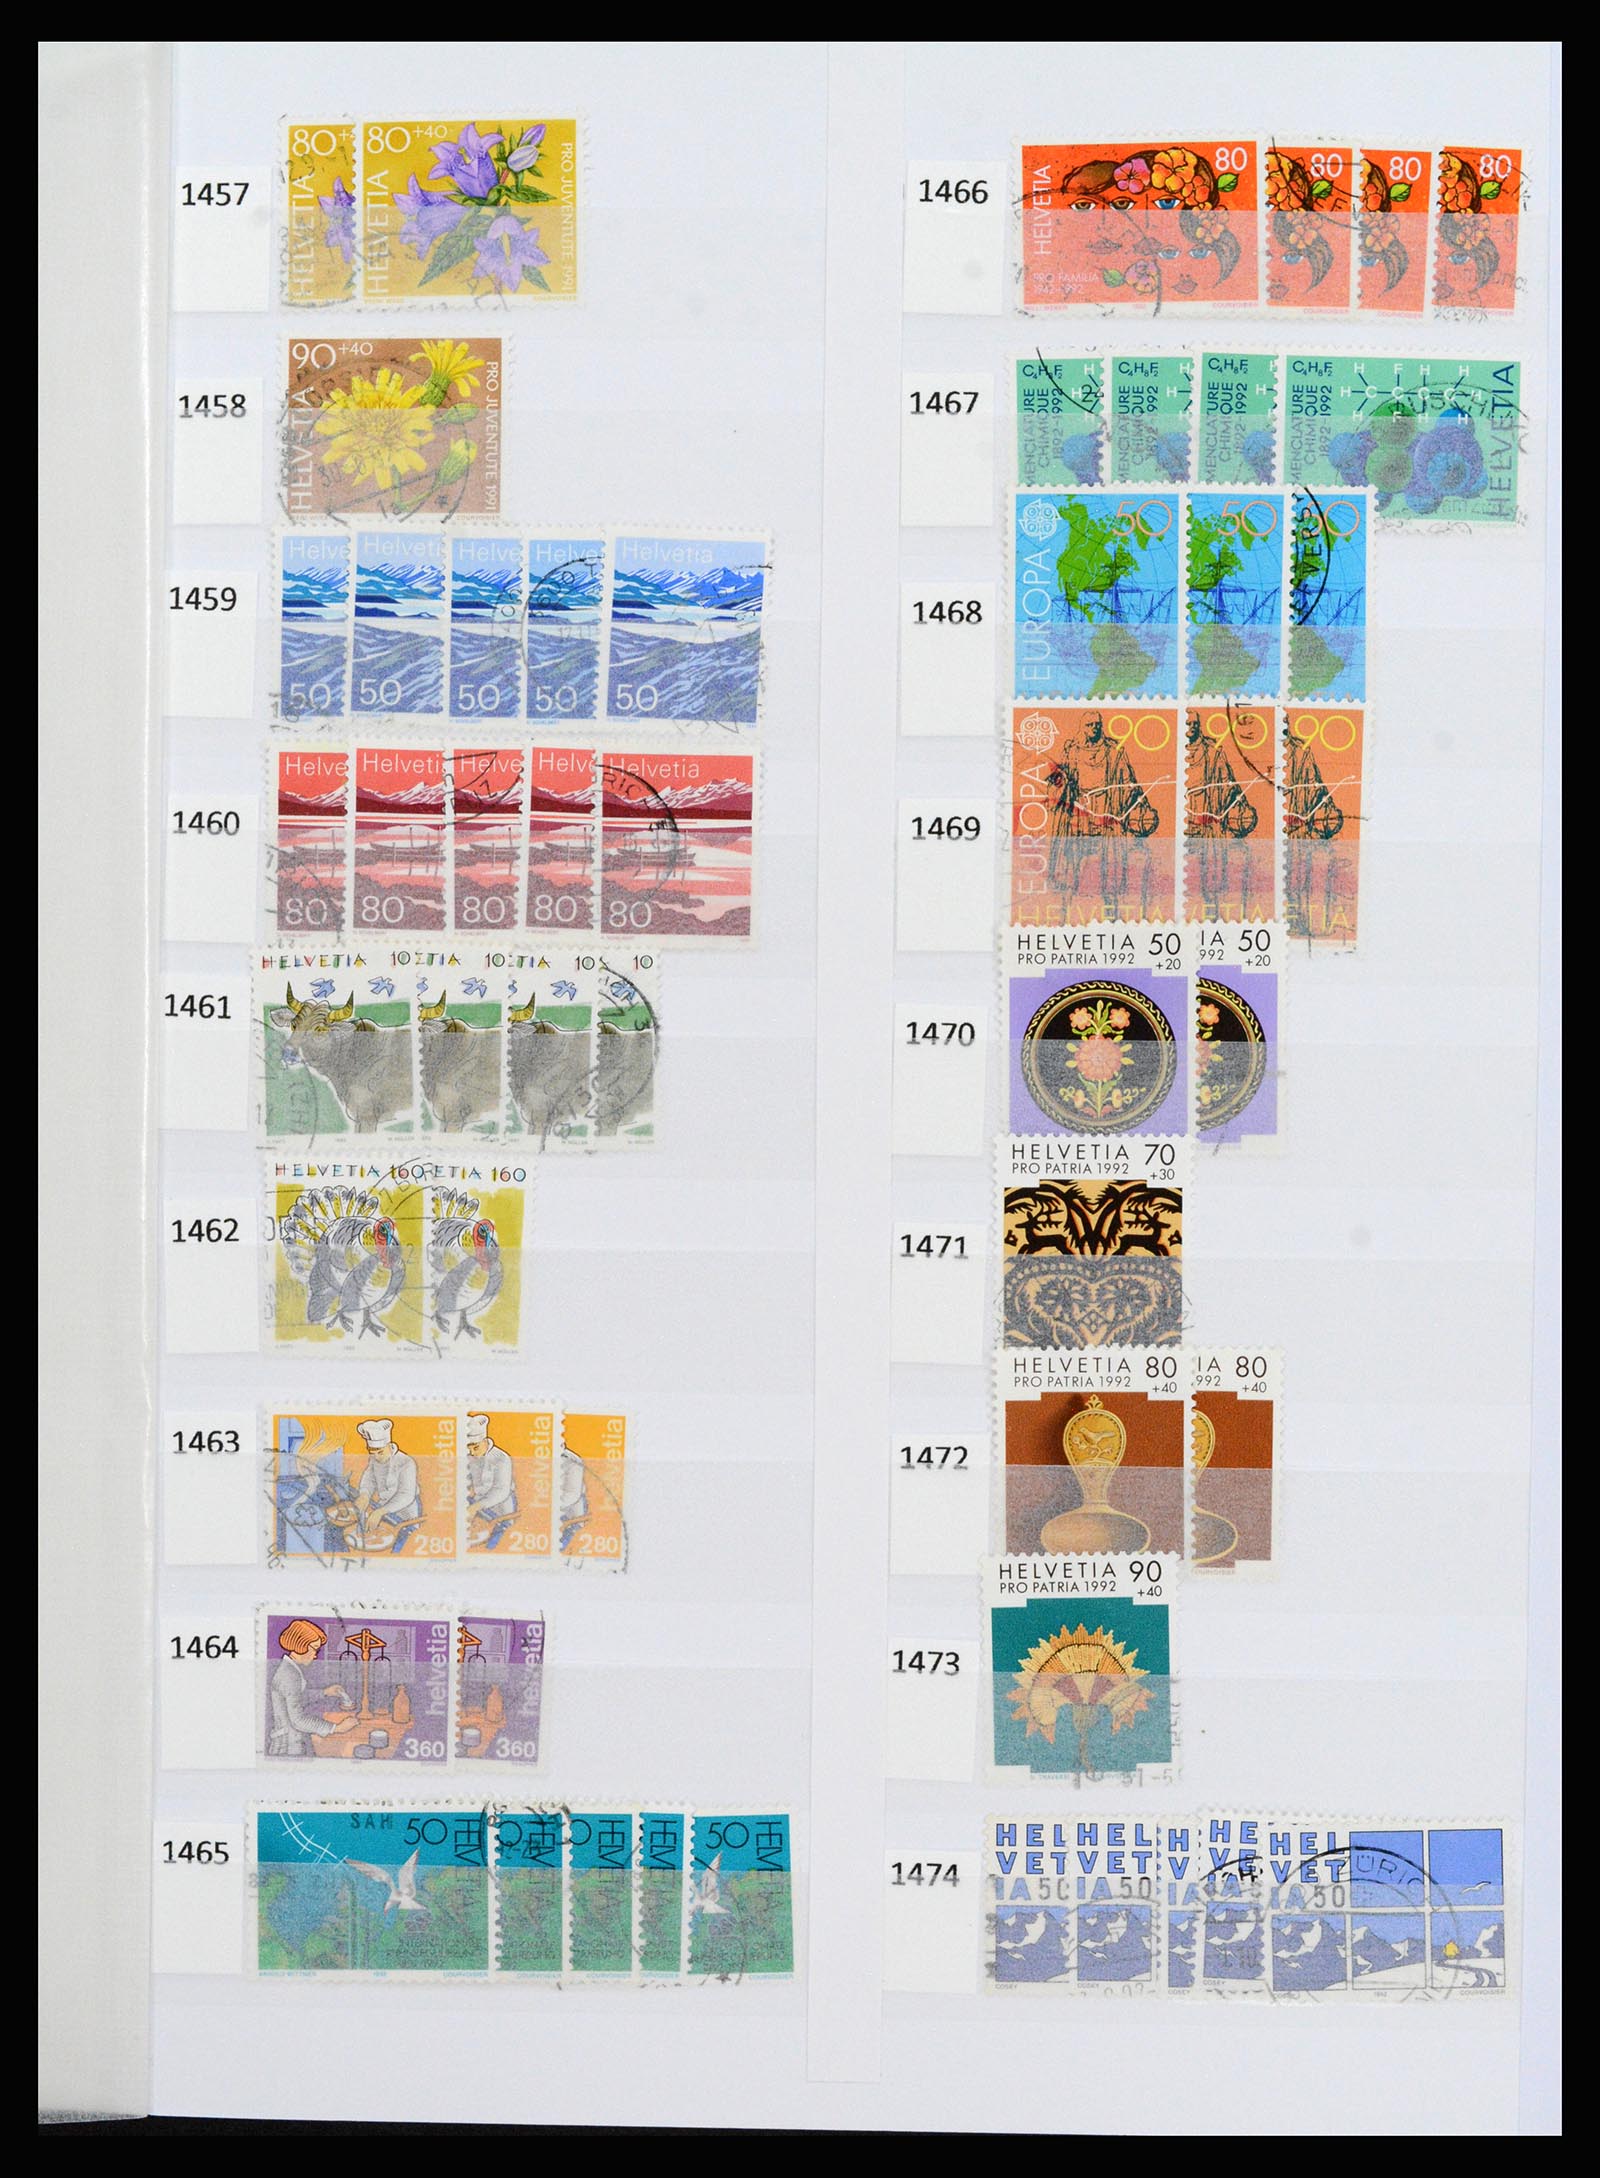 37252 082 - Stamp collection 37252 Switzerland 1900-2011.